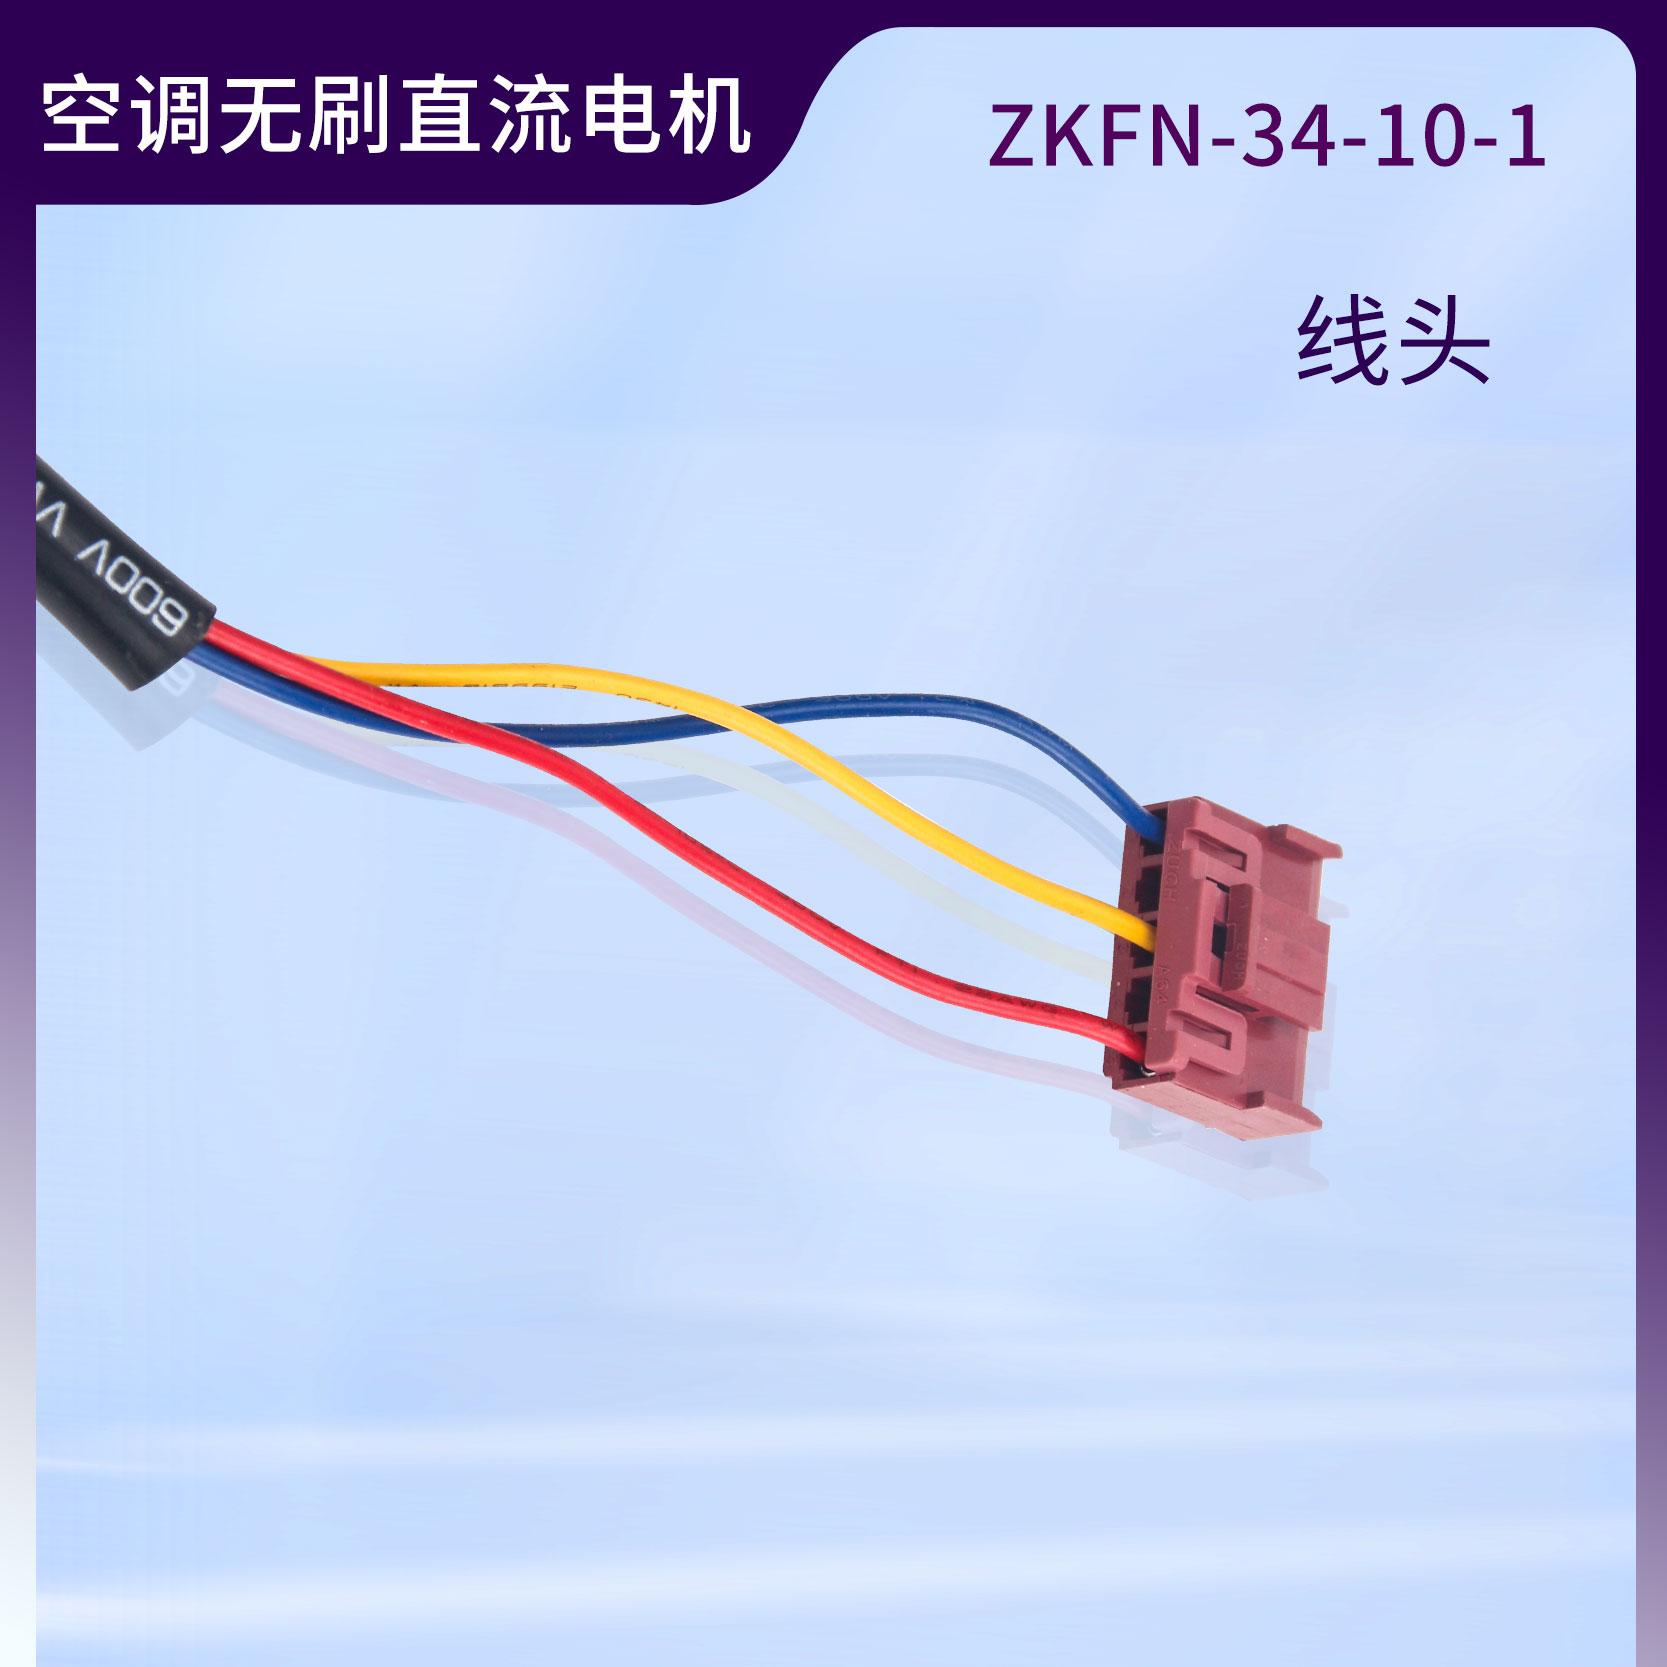 Condenser DC motor ZKFN-34-10-1 ZKFN-40-8-1 for air conditioner or heat pump outdoor unit 3